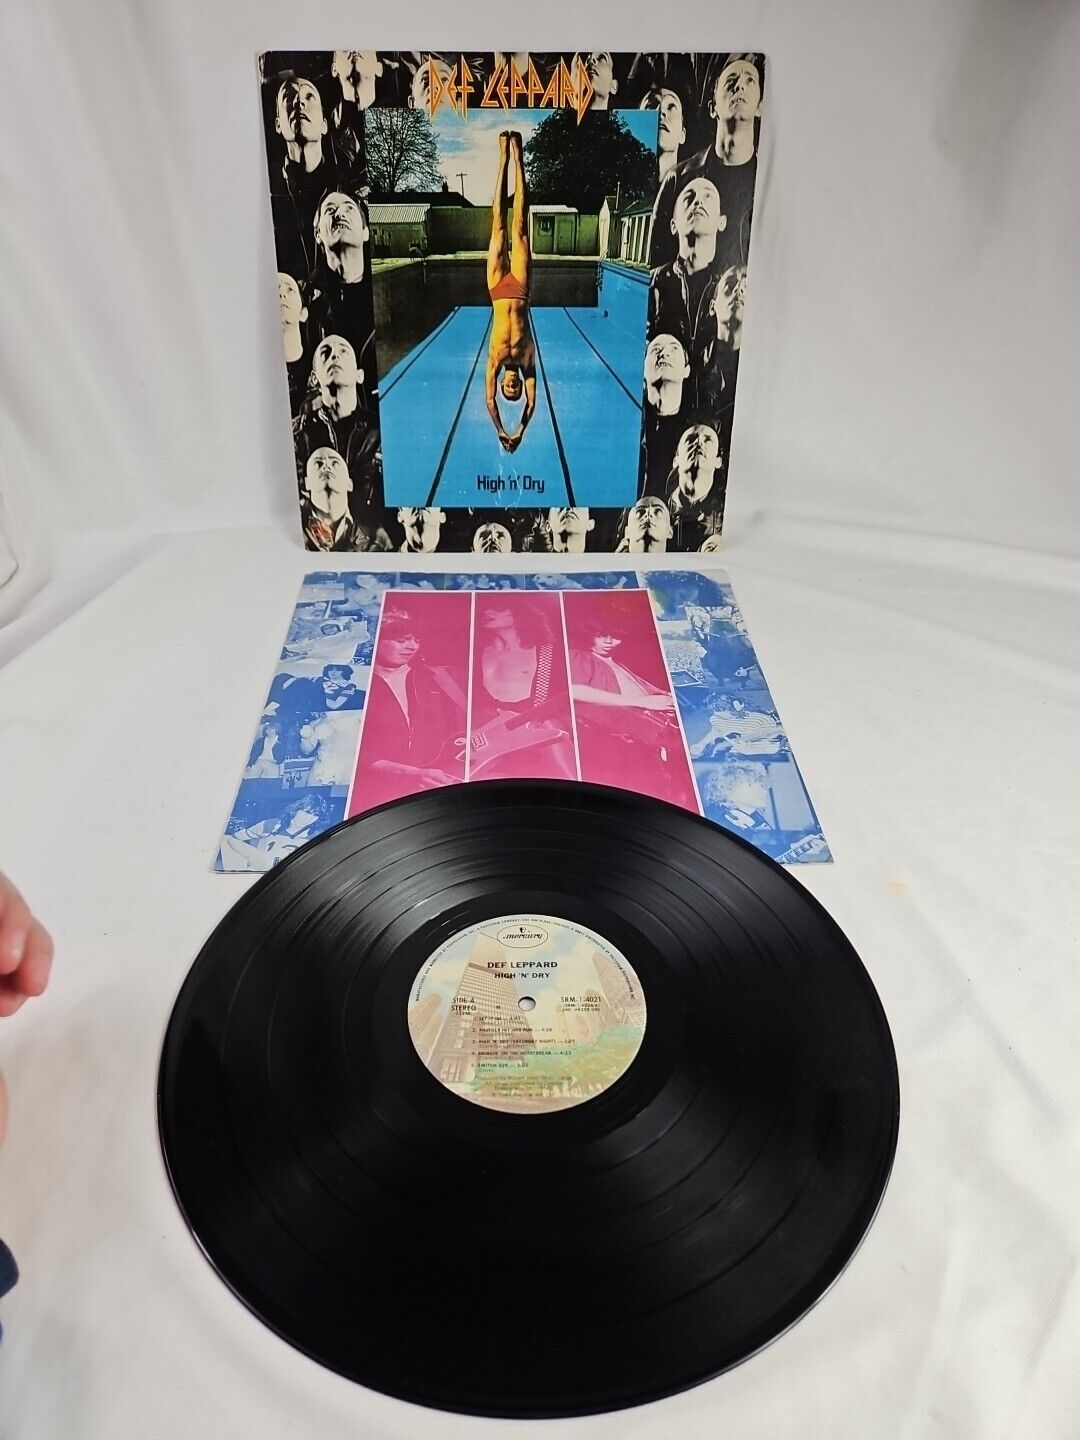 Def Leppard High 'N' Dry LP Vintage Vinyl: 1981  First Pressing SRM-1-4021 - NM